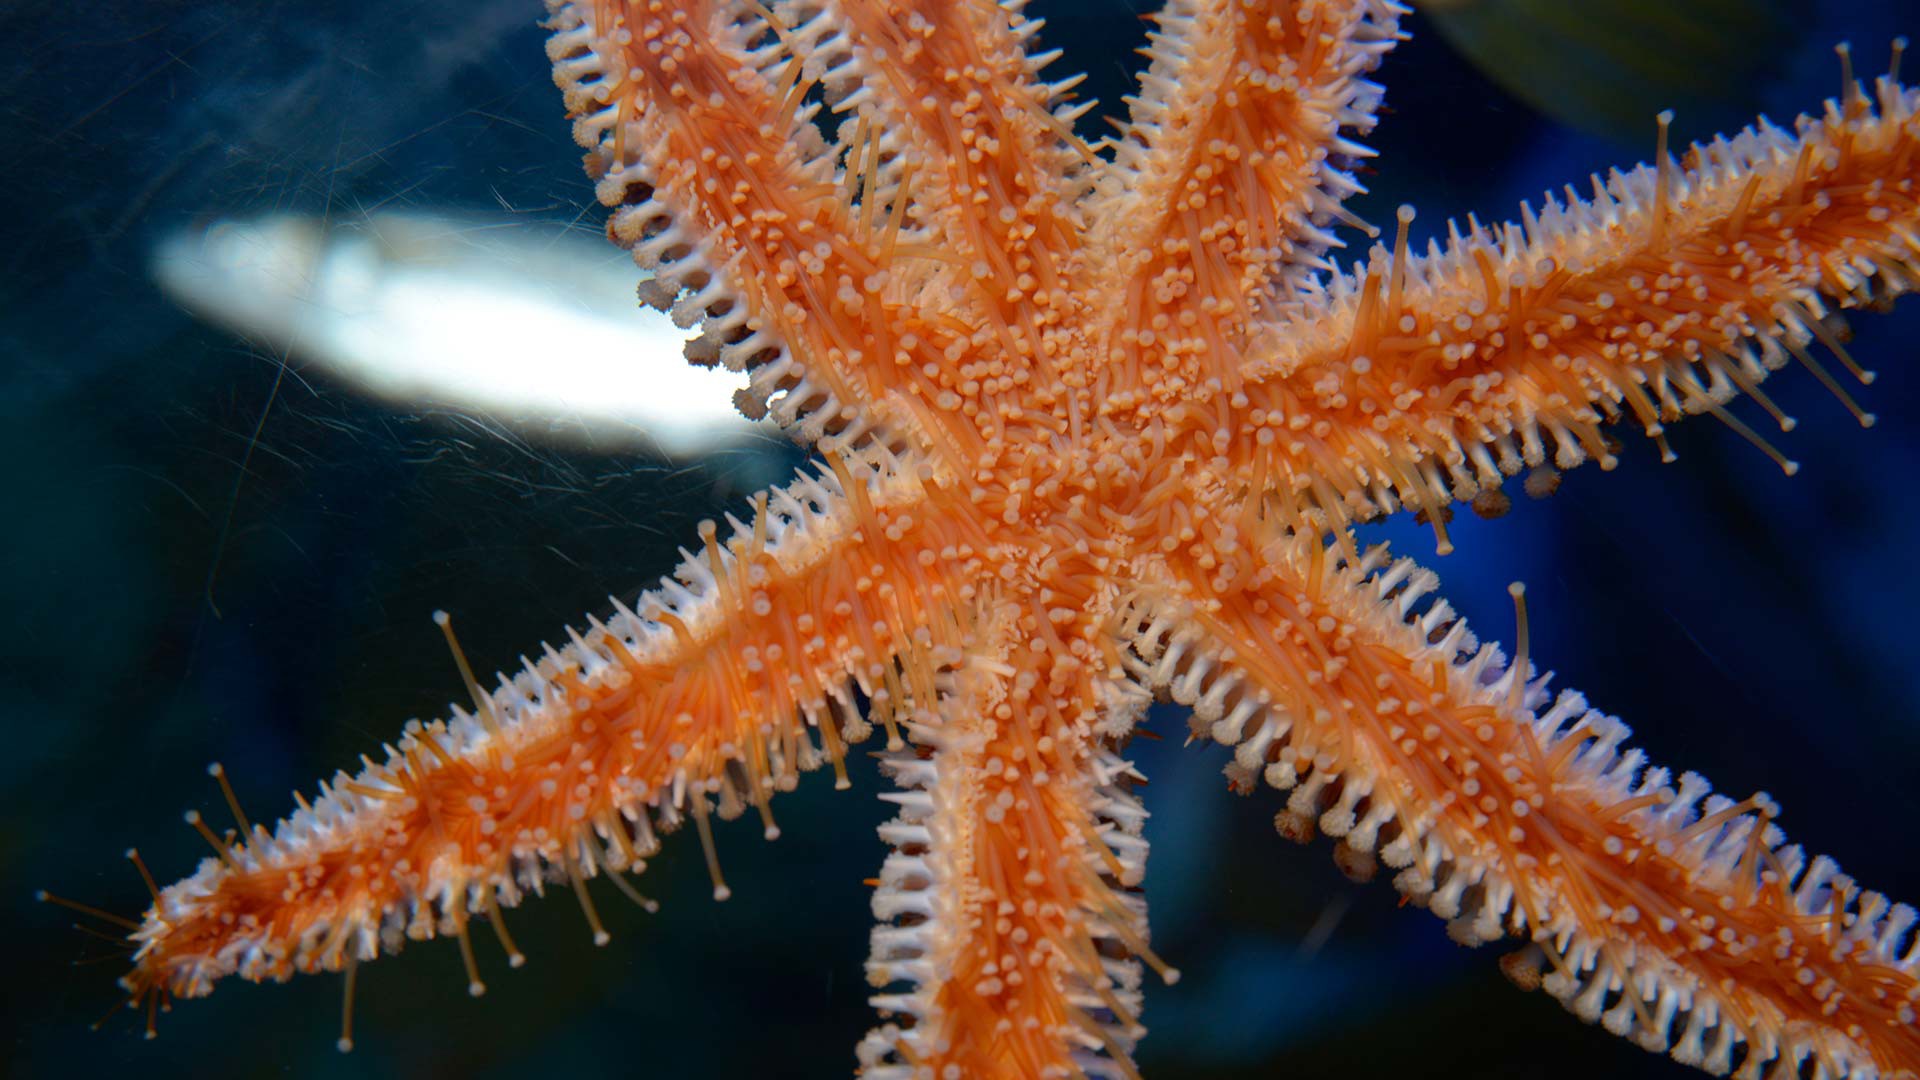 Blue spiny starfish